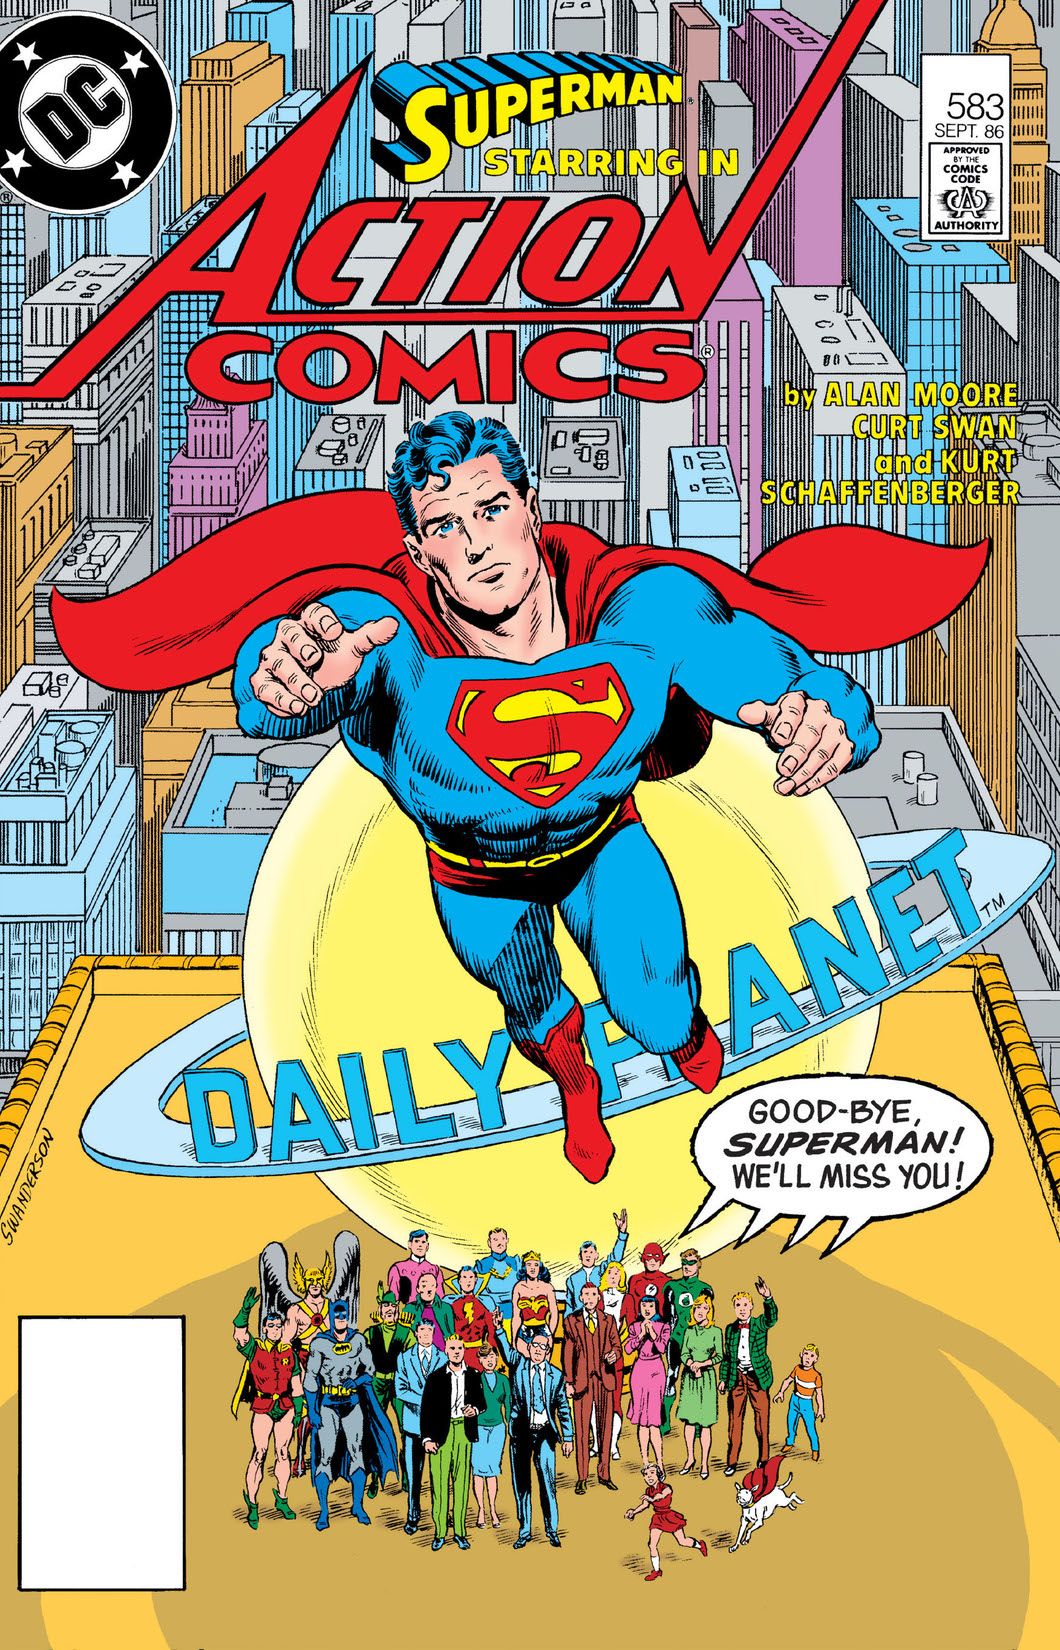 Alan Moore has Superman bid farewell to his original continuity